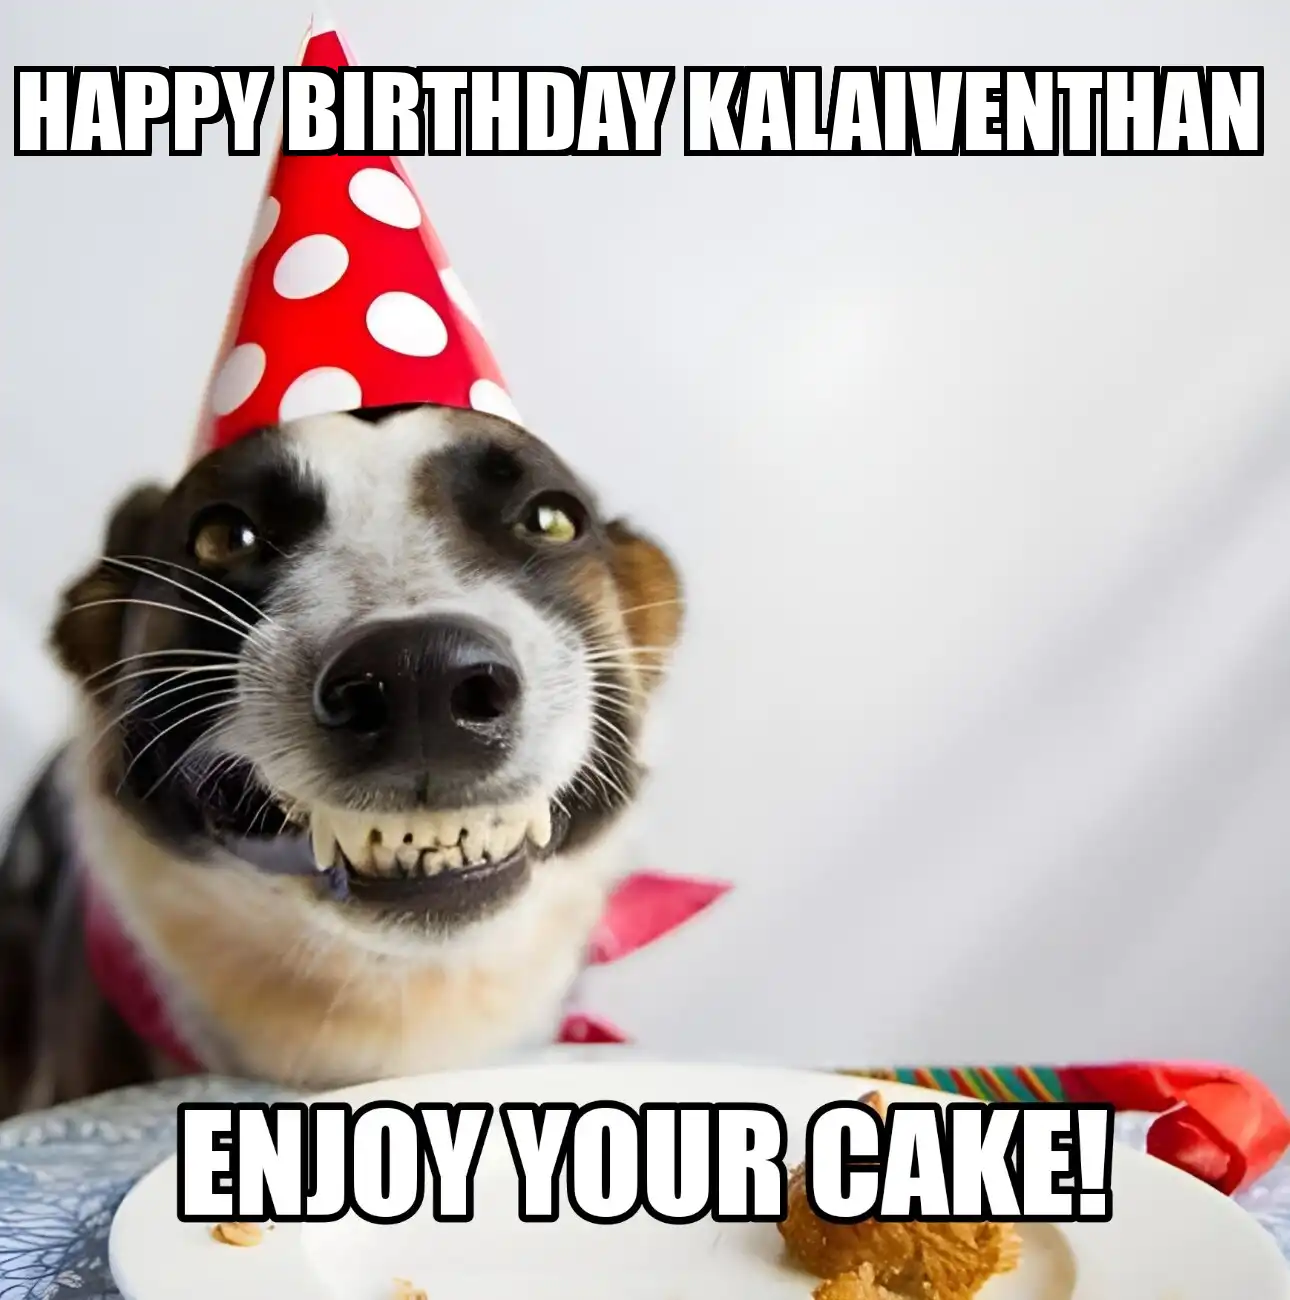 Happy Birthday Kalaiventhan Enjoy Your Cake Dog Meme